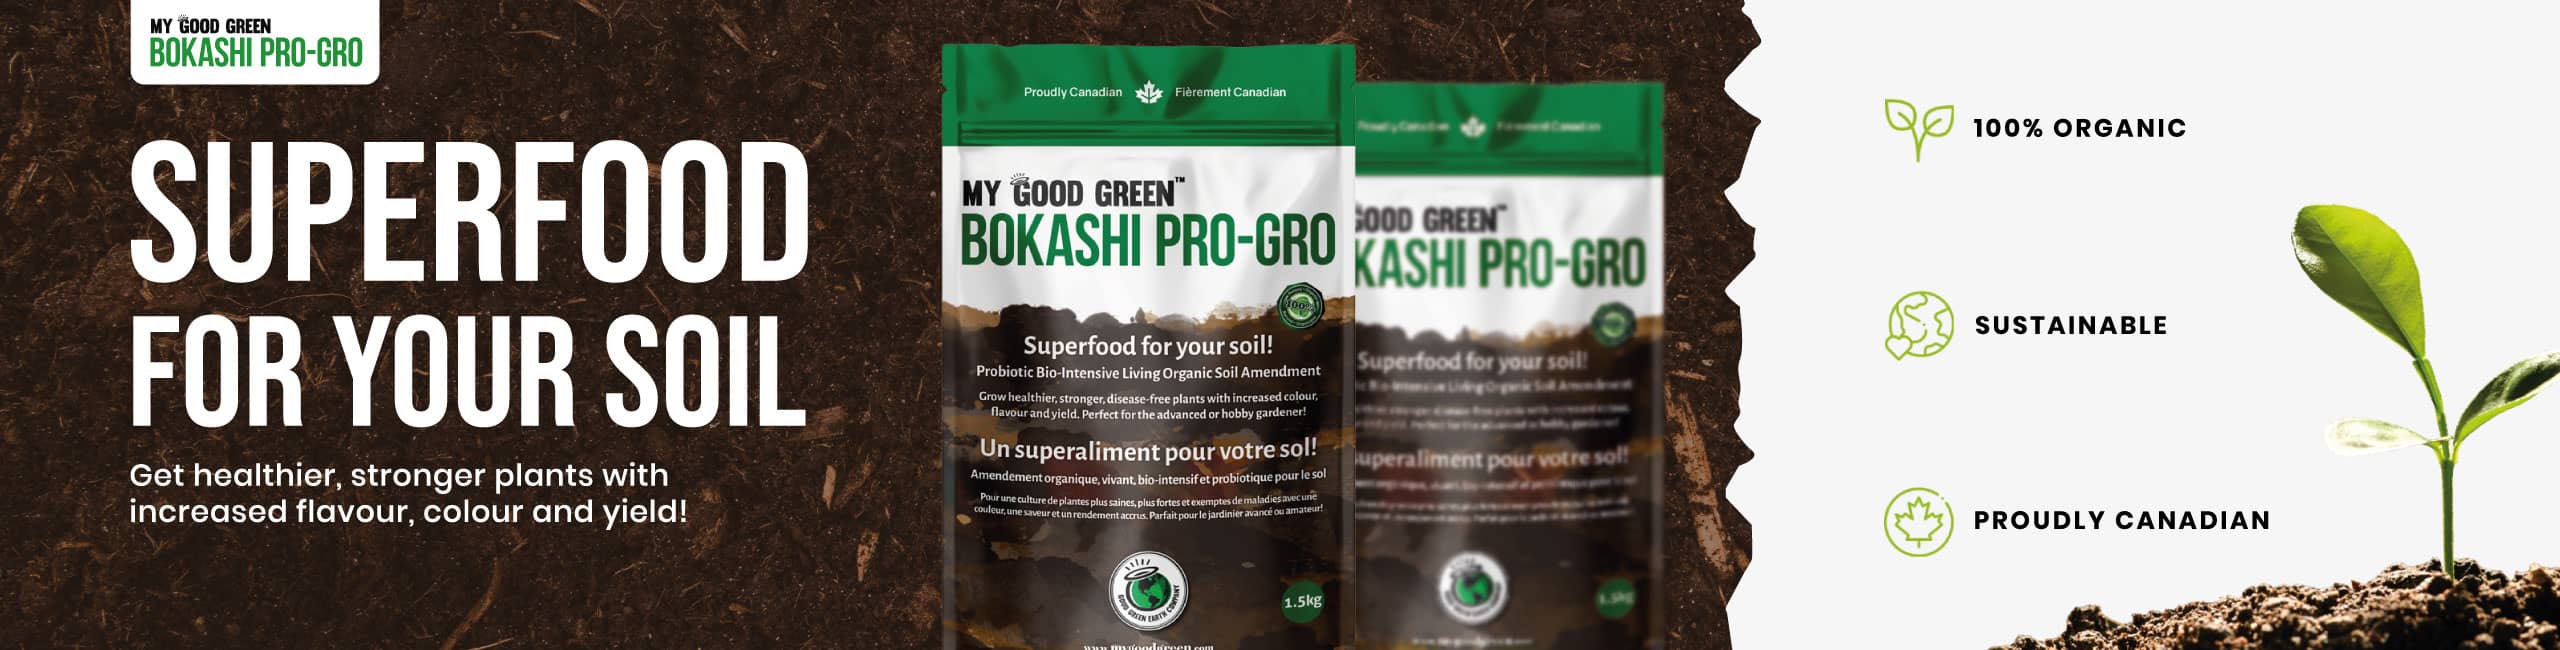 Bokashi Pro Gro Soil Amendment Easy Grow